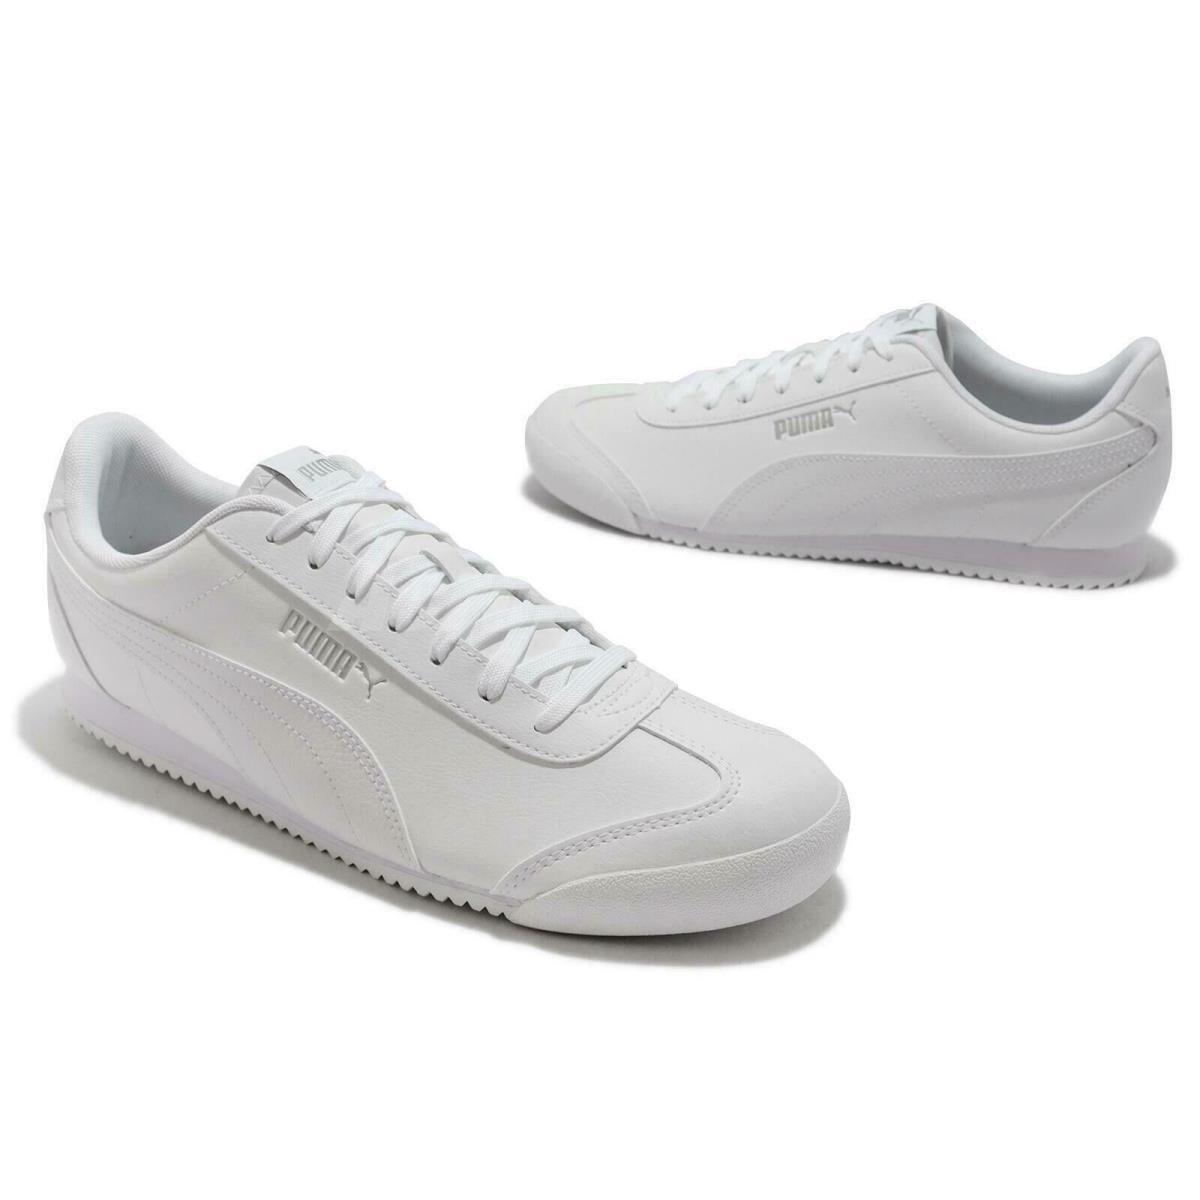 Puma Turino Fsl White Silver Men Casual Lifestyle Shoes Sneakers Size 10